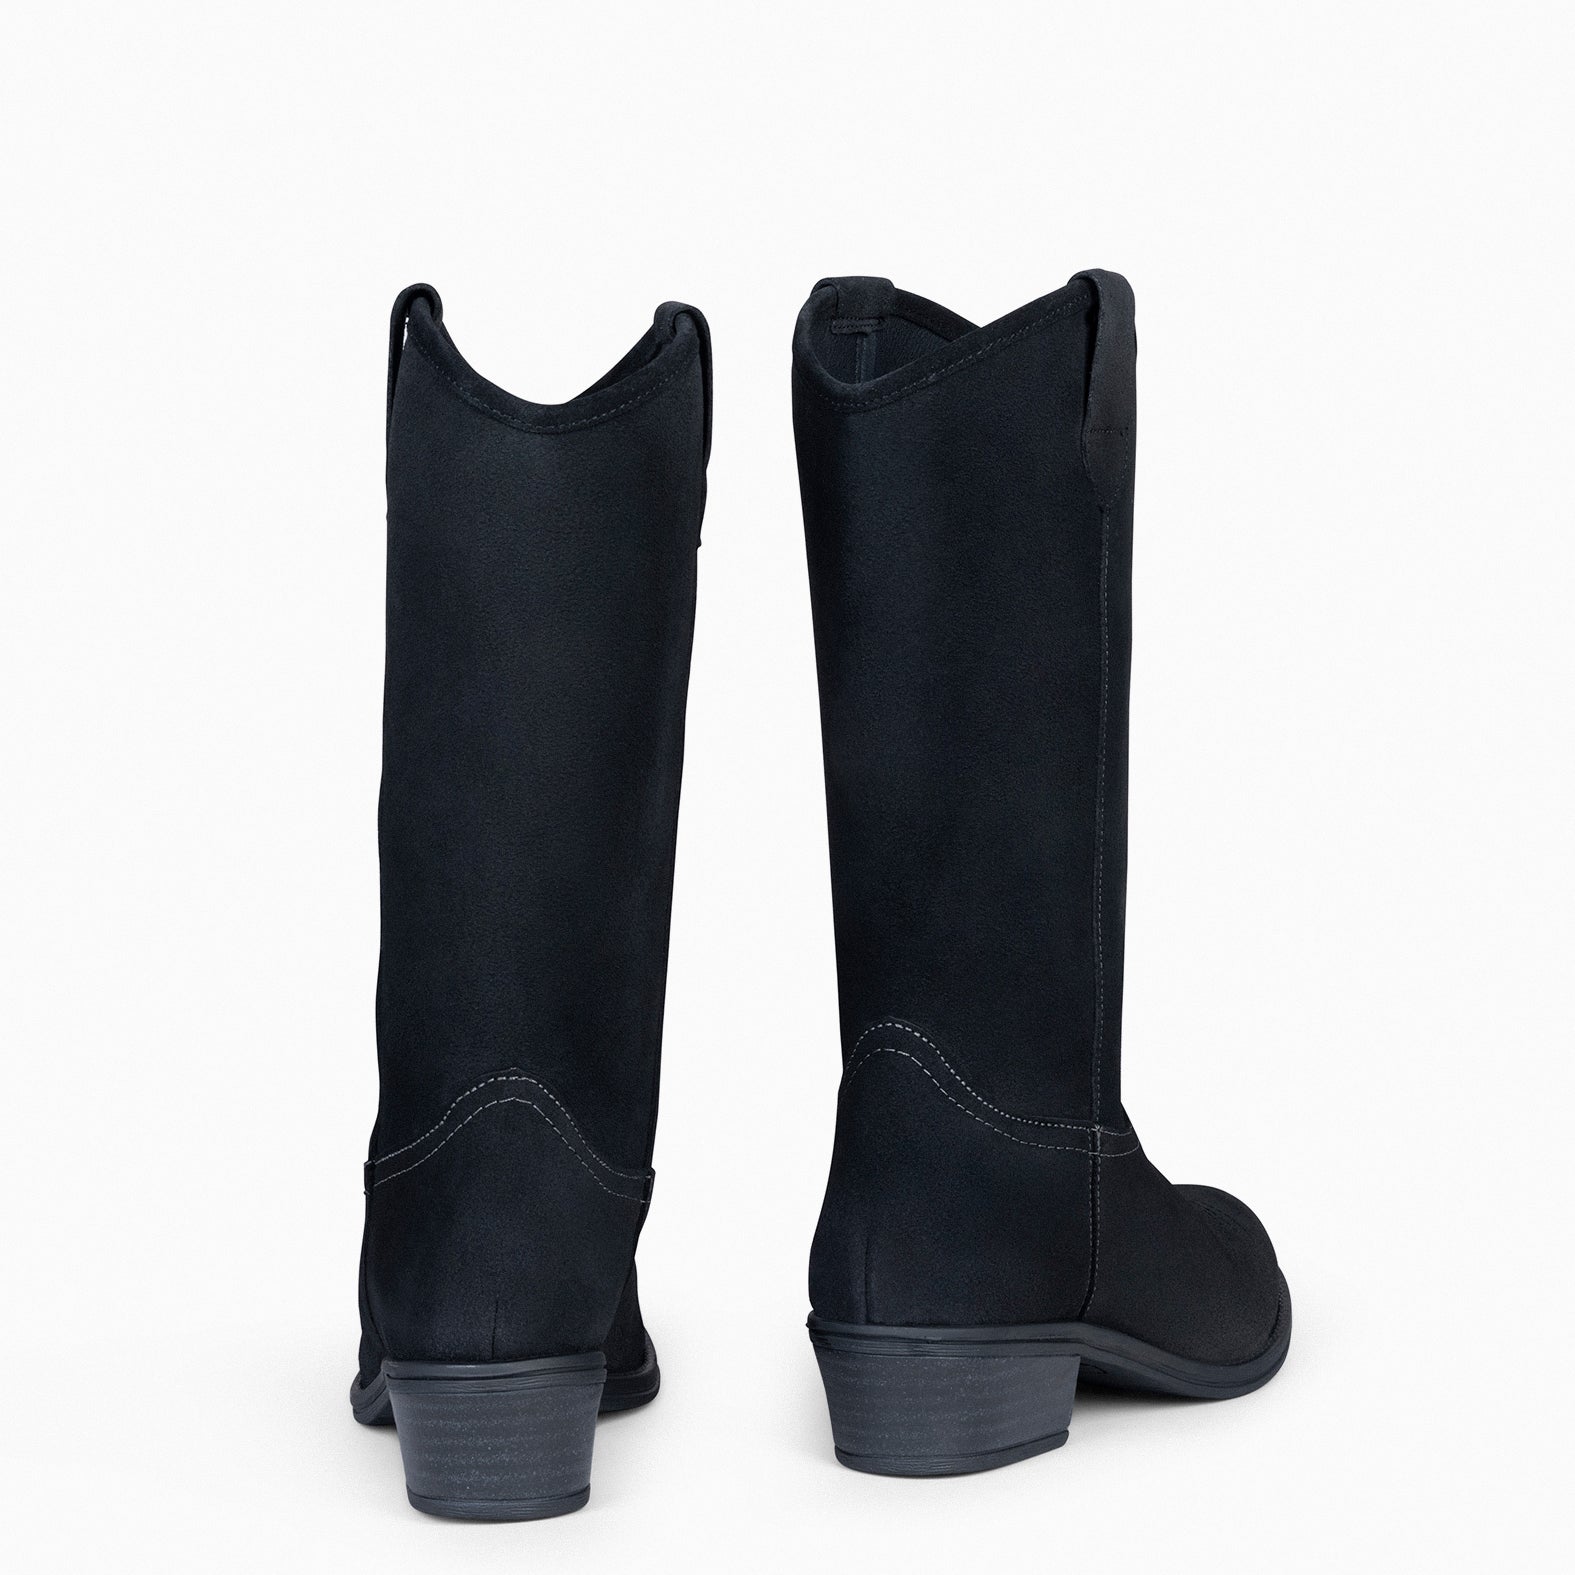 ONTARIO – BLACK Women Cowboy Boots